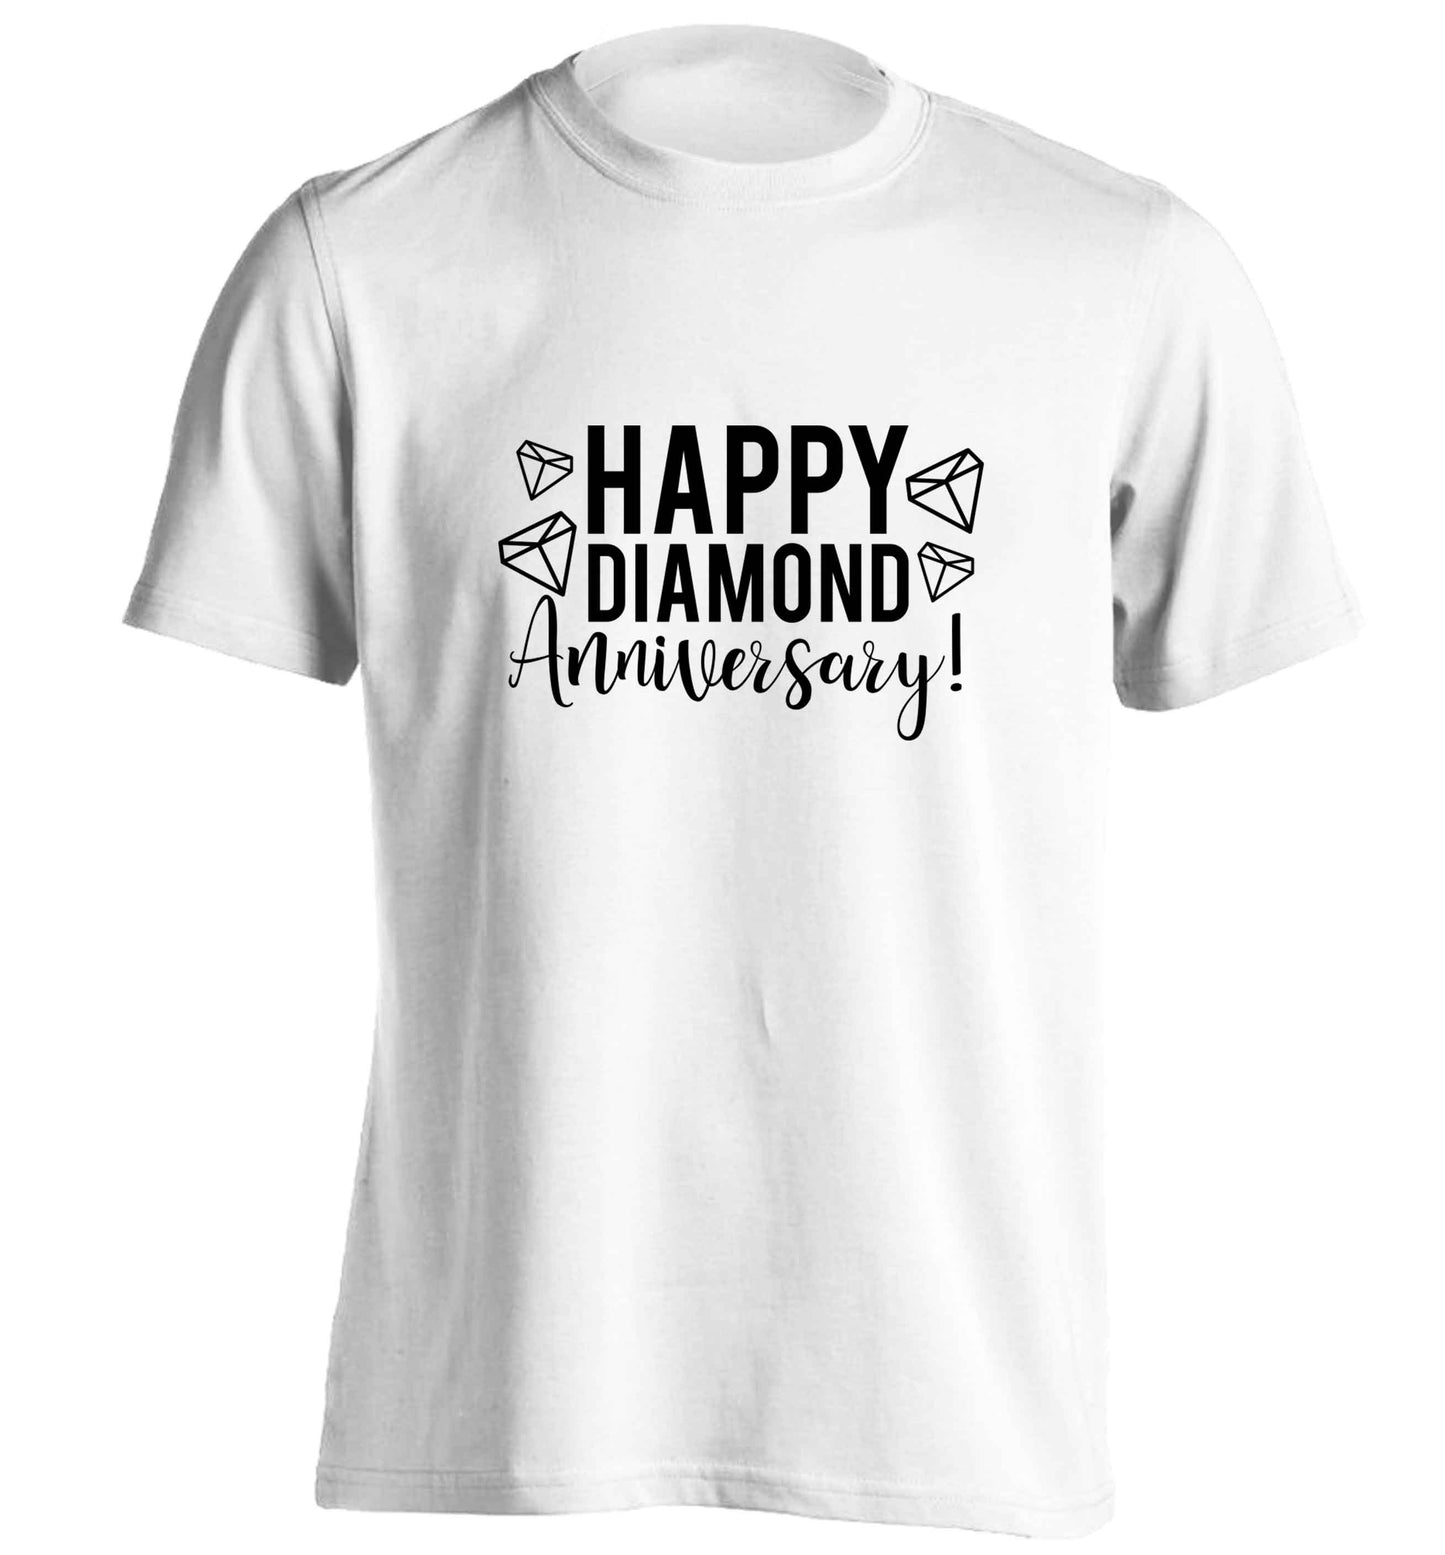 Happy diamond anniversary! adults unisex white Tshirt 2XL